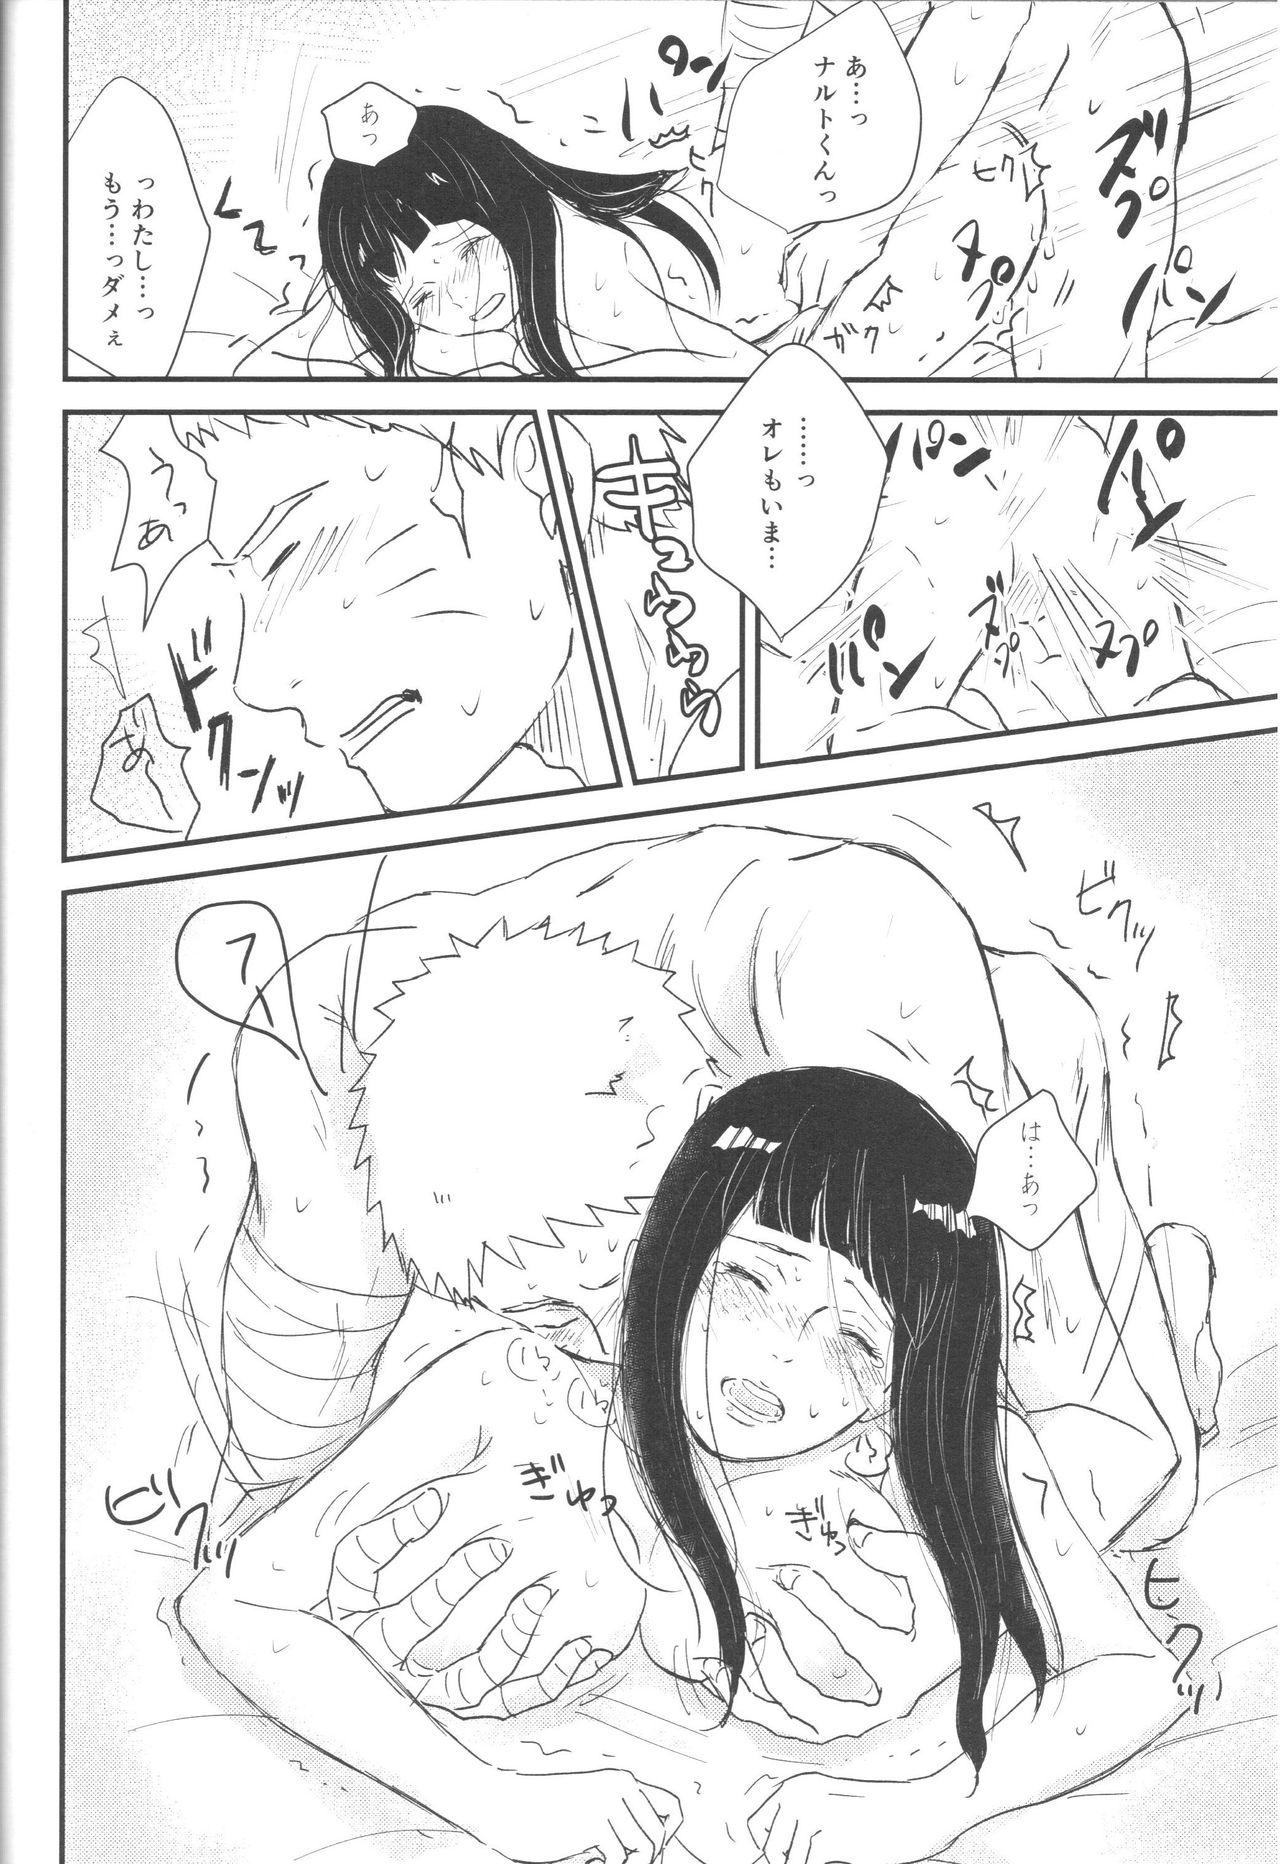 X times Page 25 Of 31 naruto hentai manga, X times Page 25 Of 31 naruto hen...